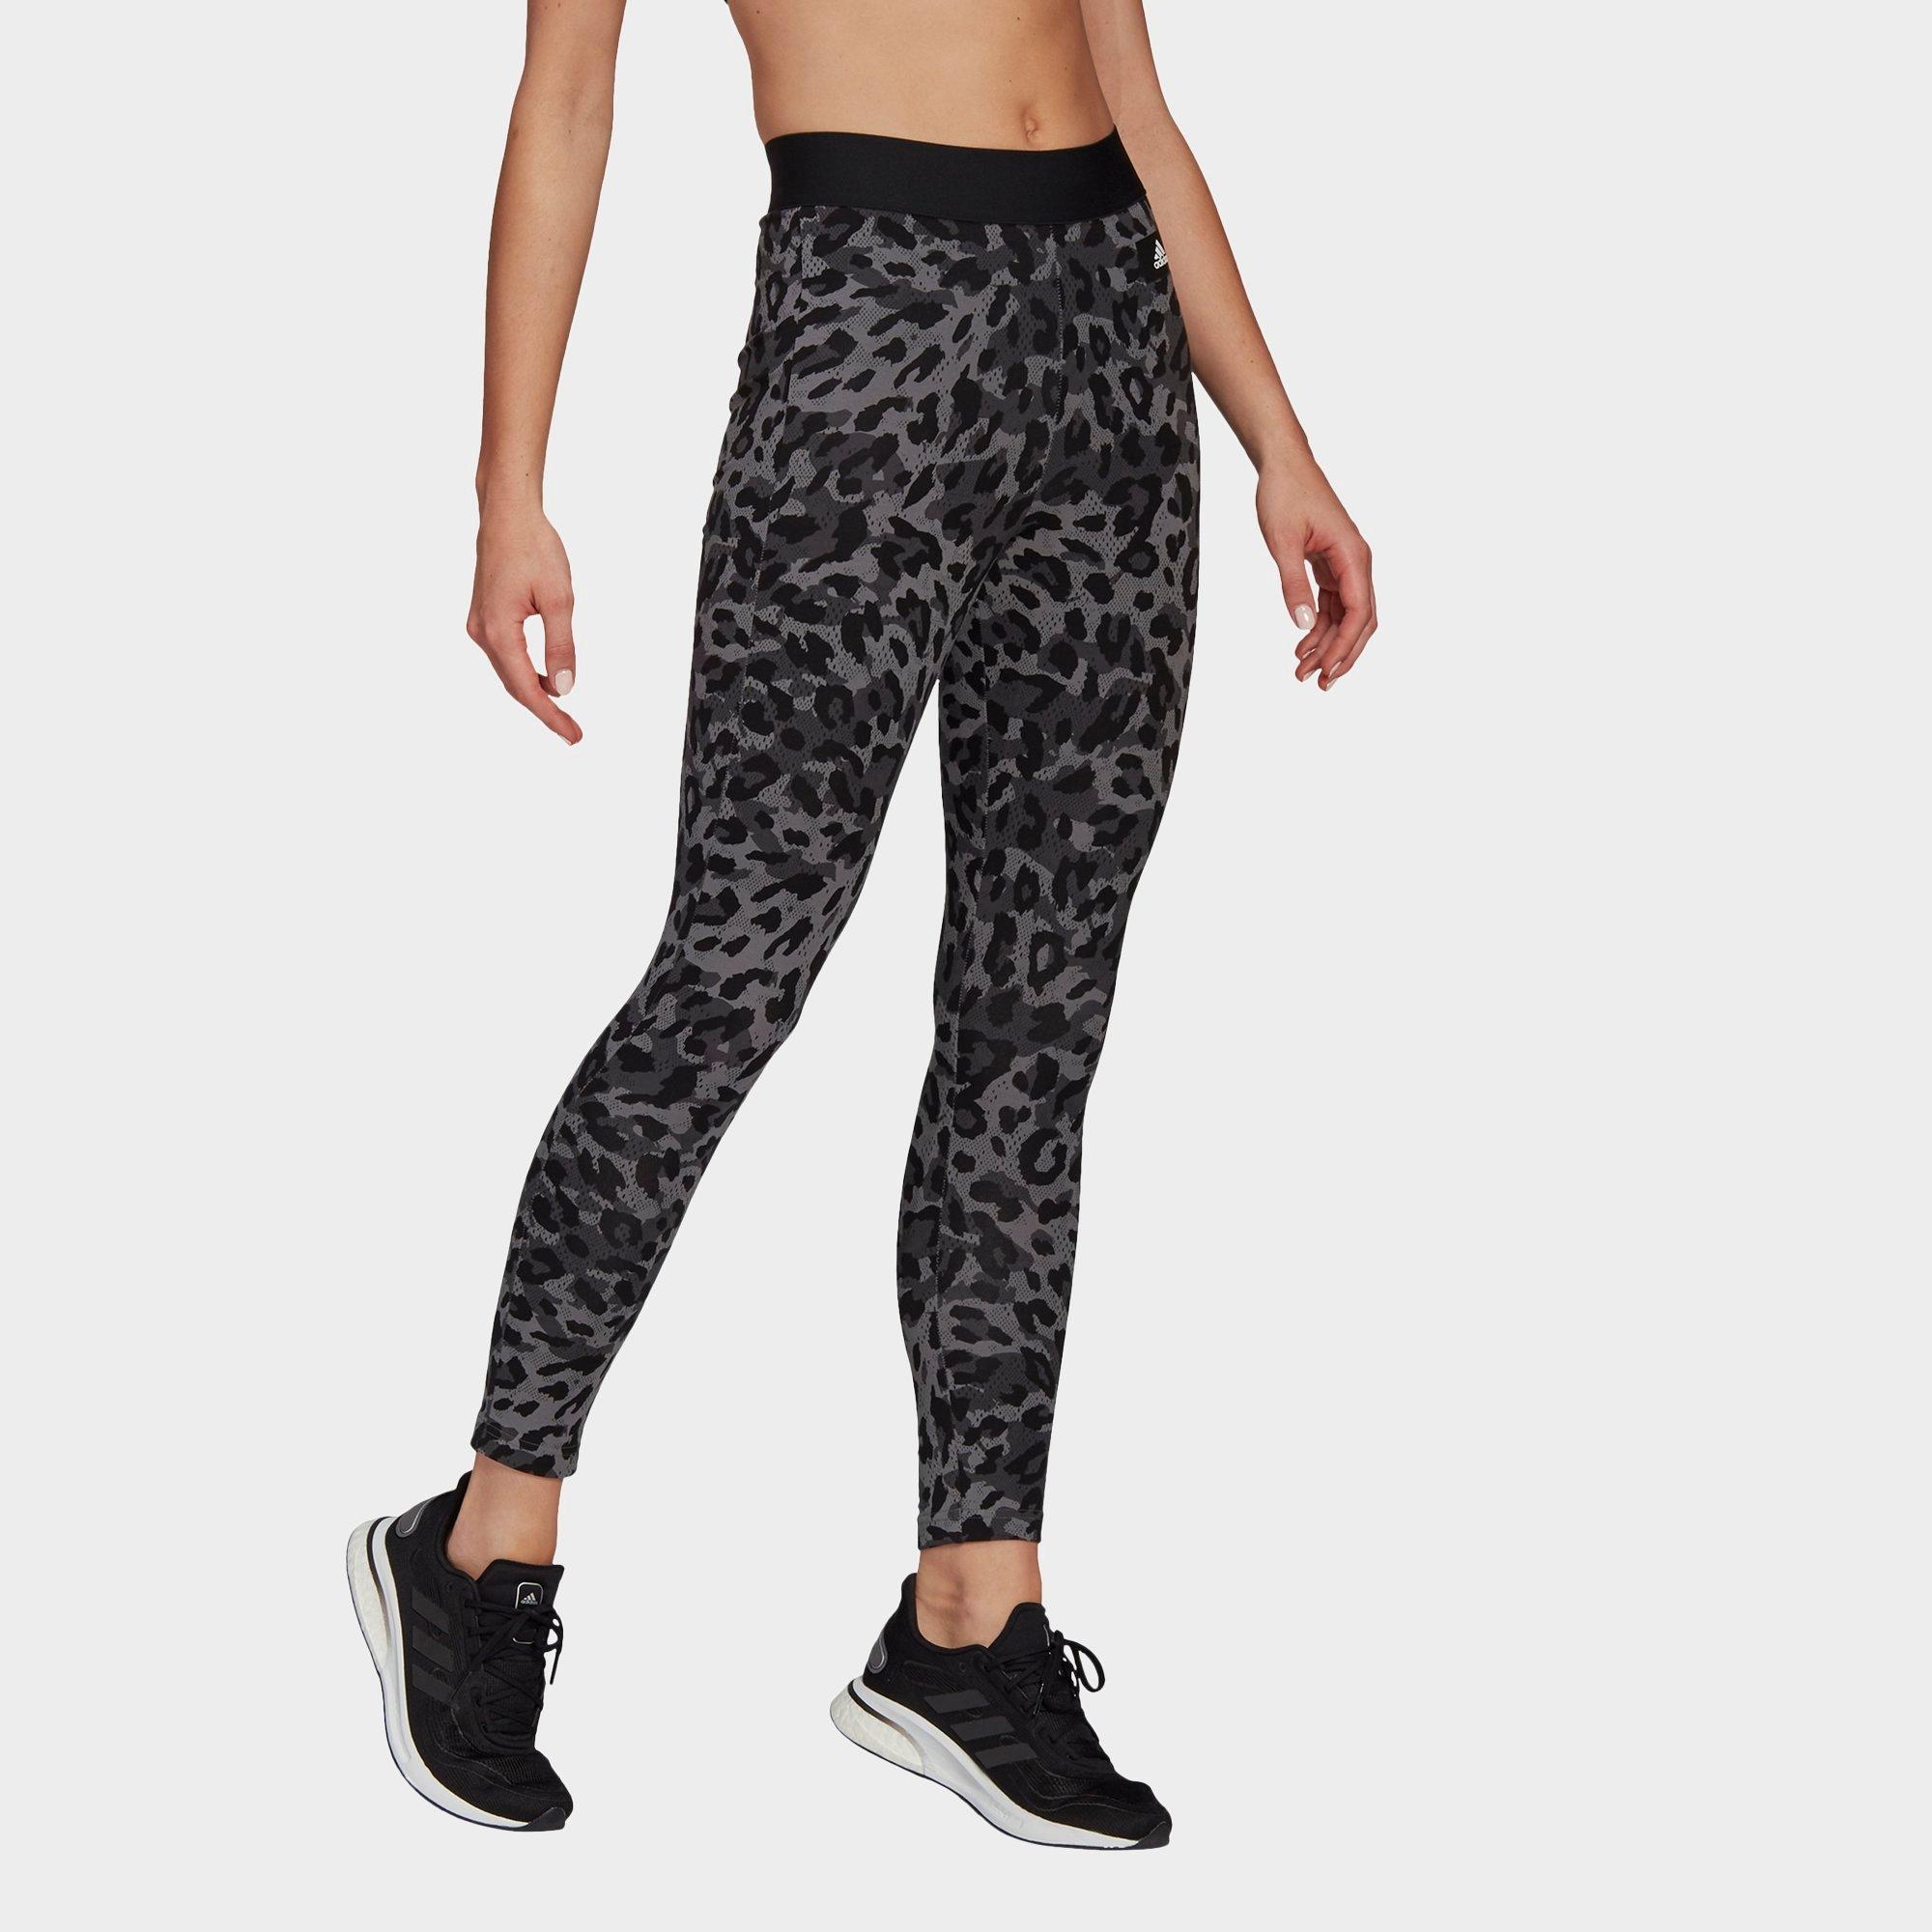 adidas leopard pants